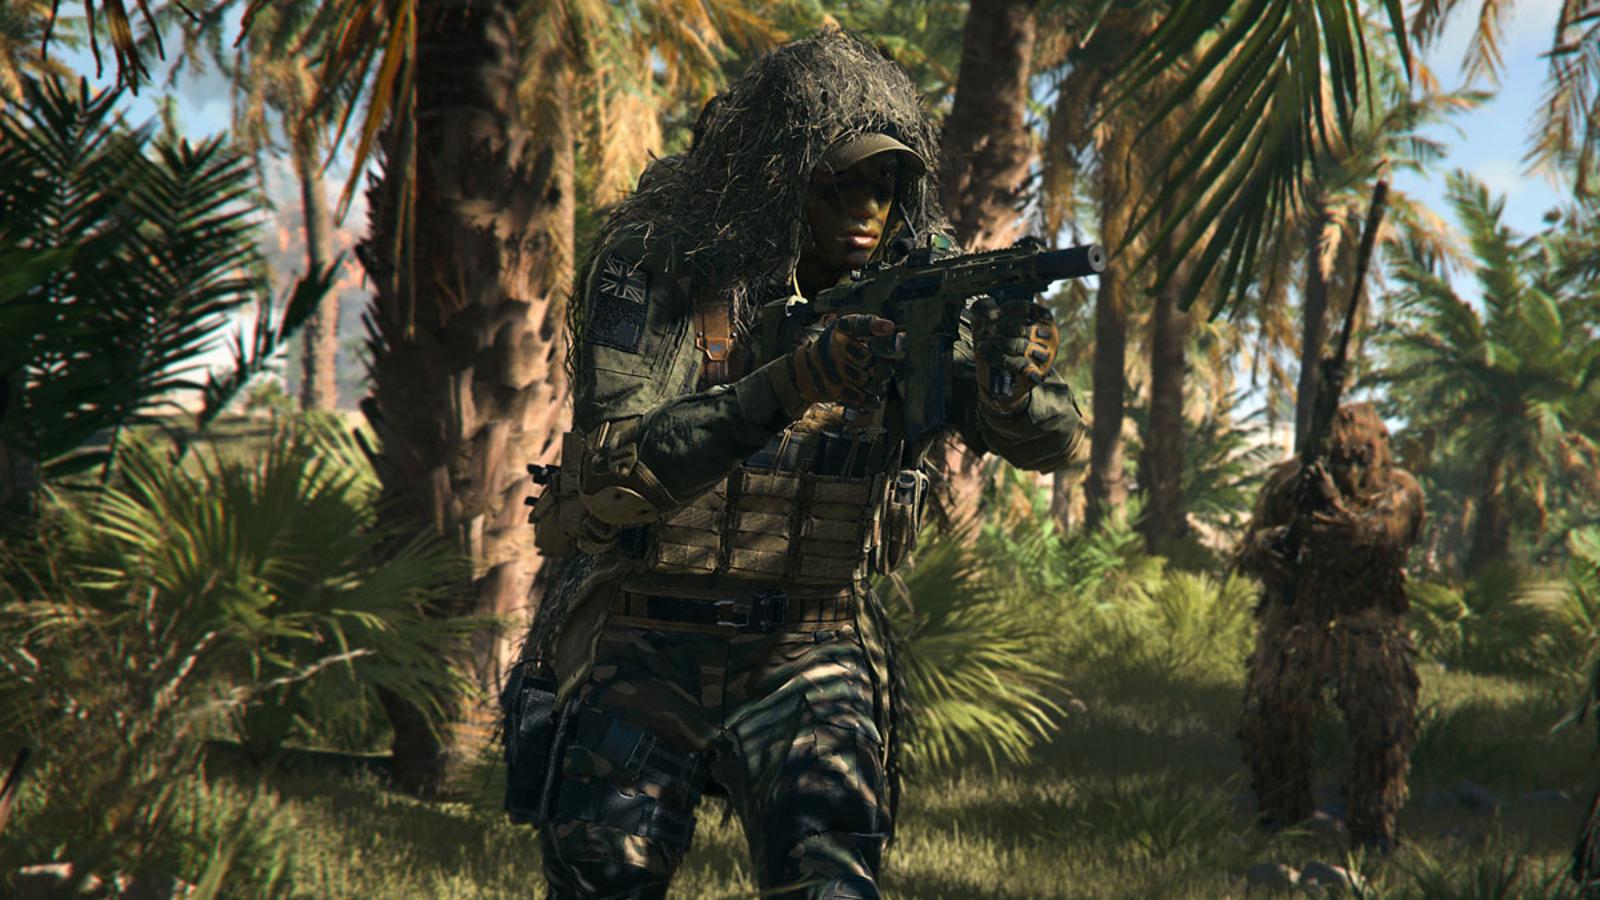 Gaz in Modern Warfare 2 moving through a wooded area.